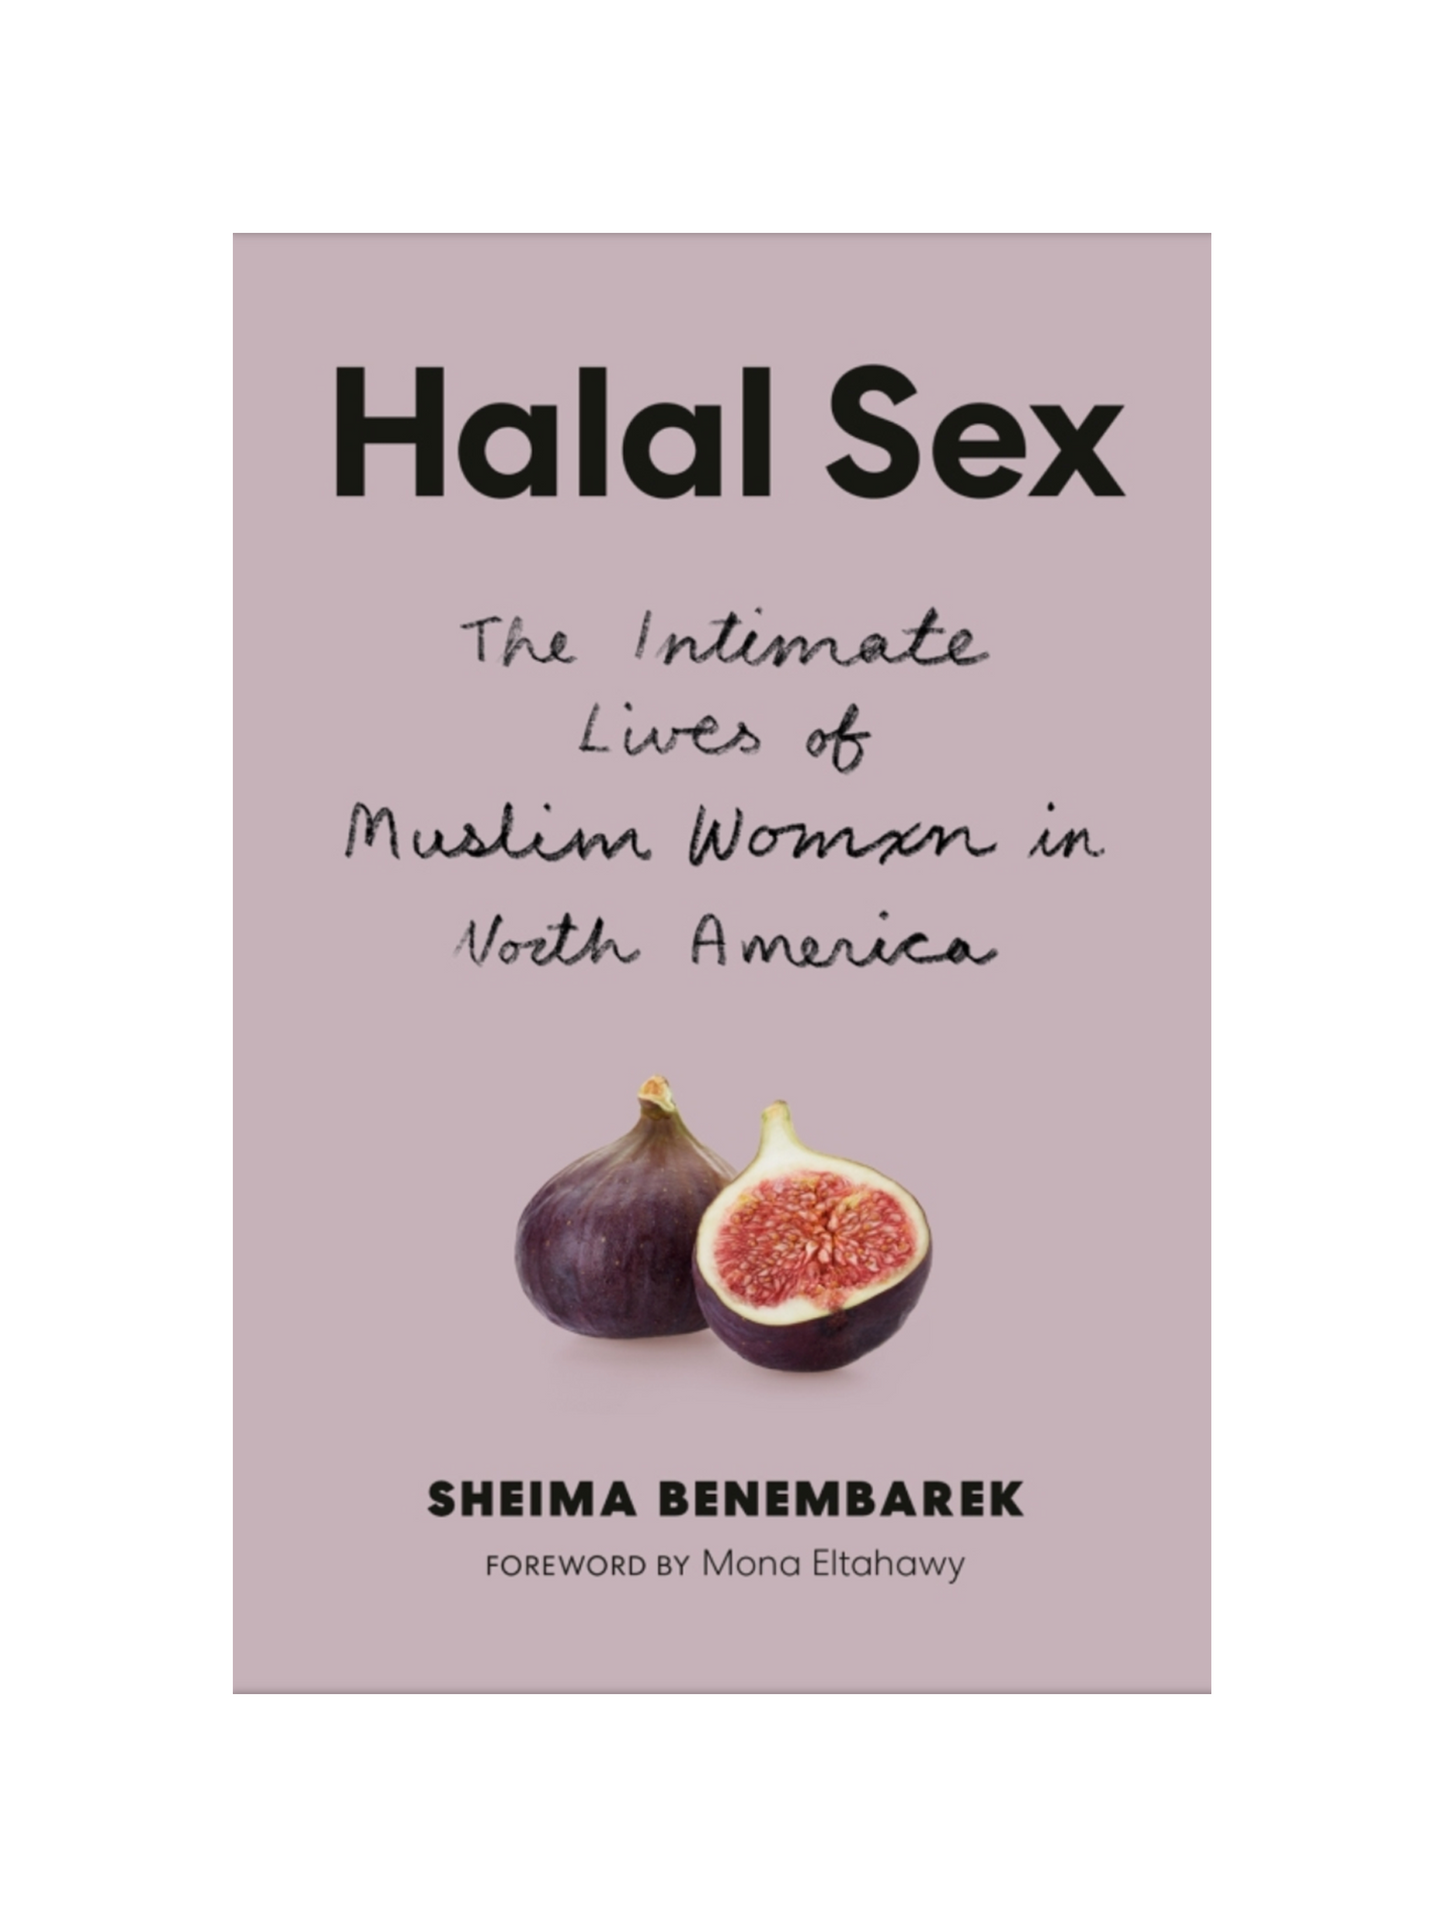 Halal Sex